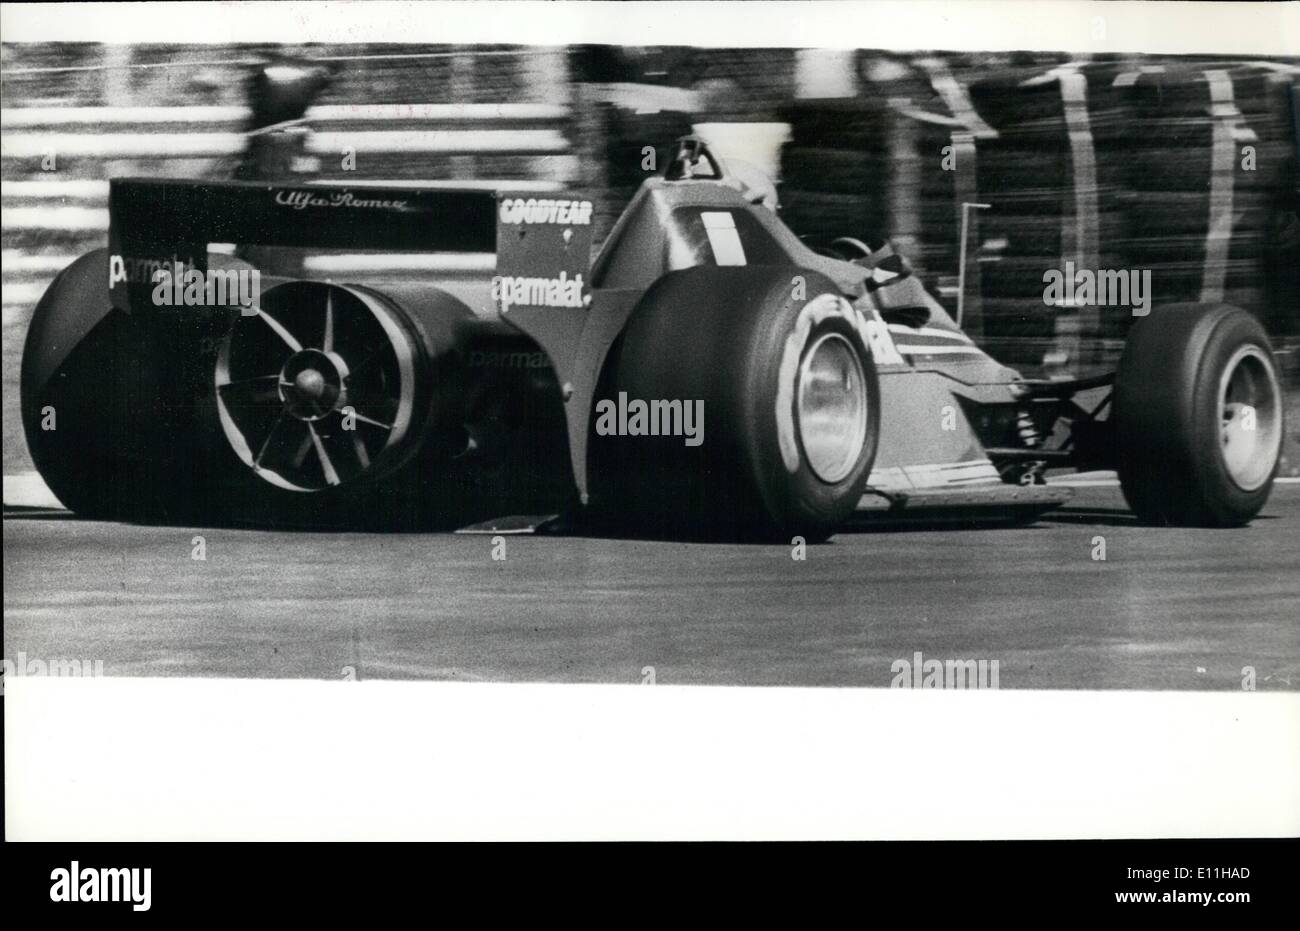 Jun. 06, 1978 - Niki Lauda Wins The Swedish Grand Prix: Niki Lauda